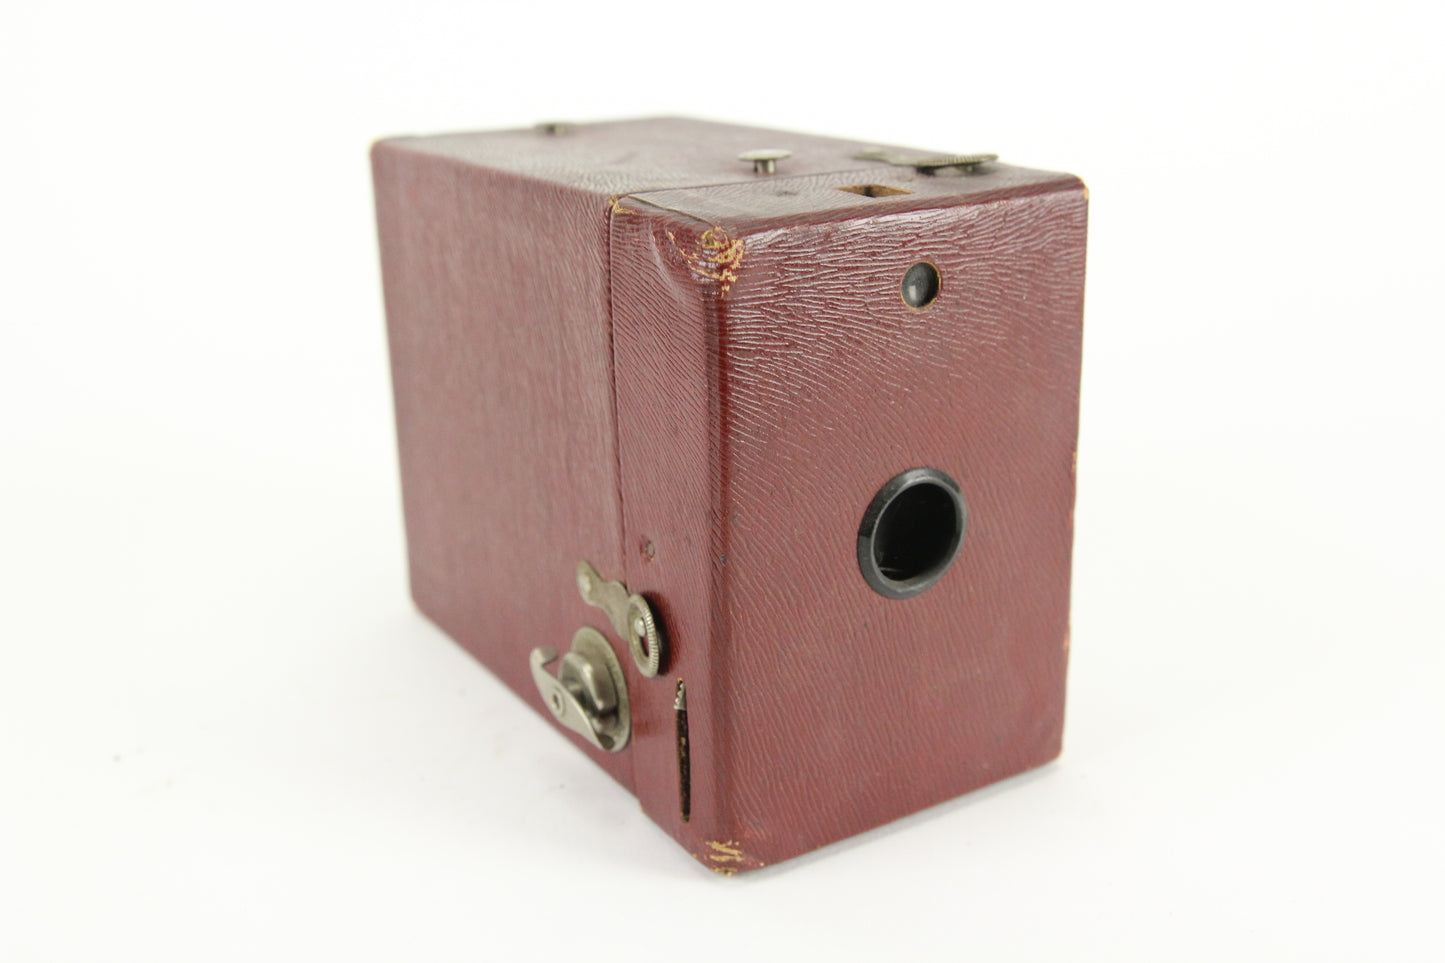 Eastman Kodak Rainbow Hawk-Eye No. 2 Box Camera (Red Color)